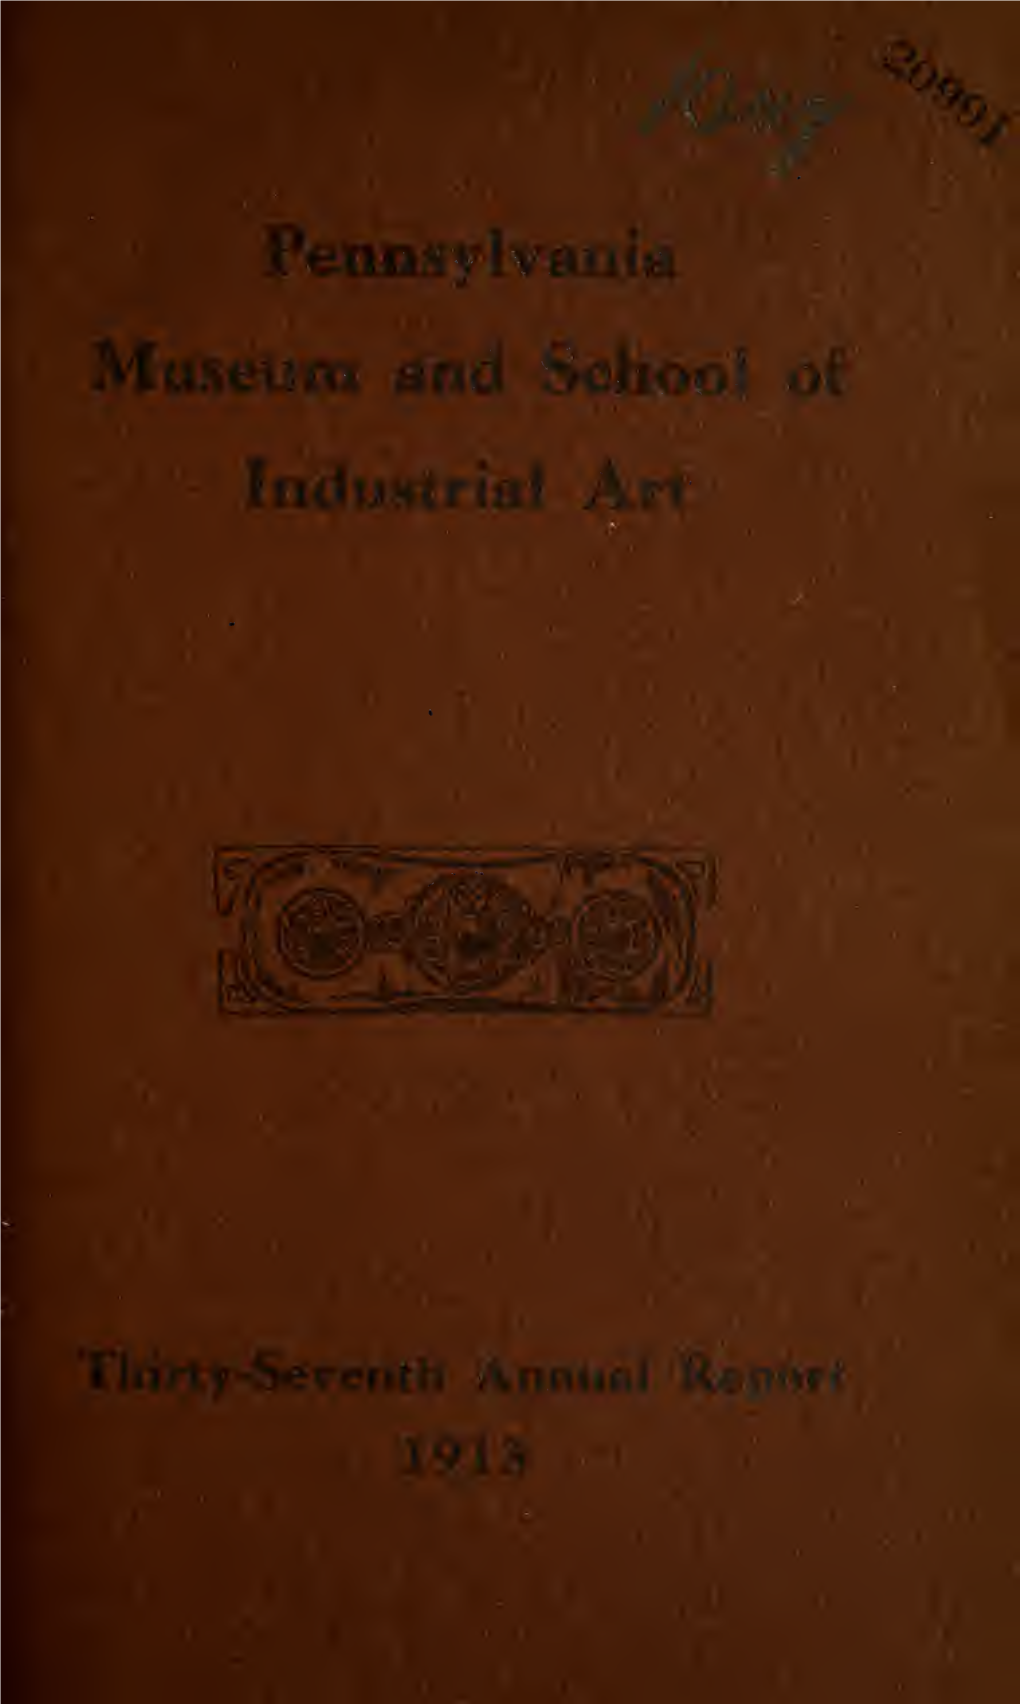 Annual Report, 1913